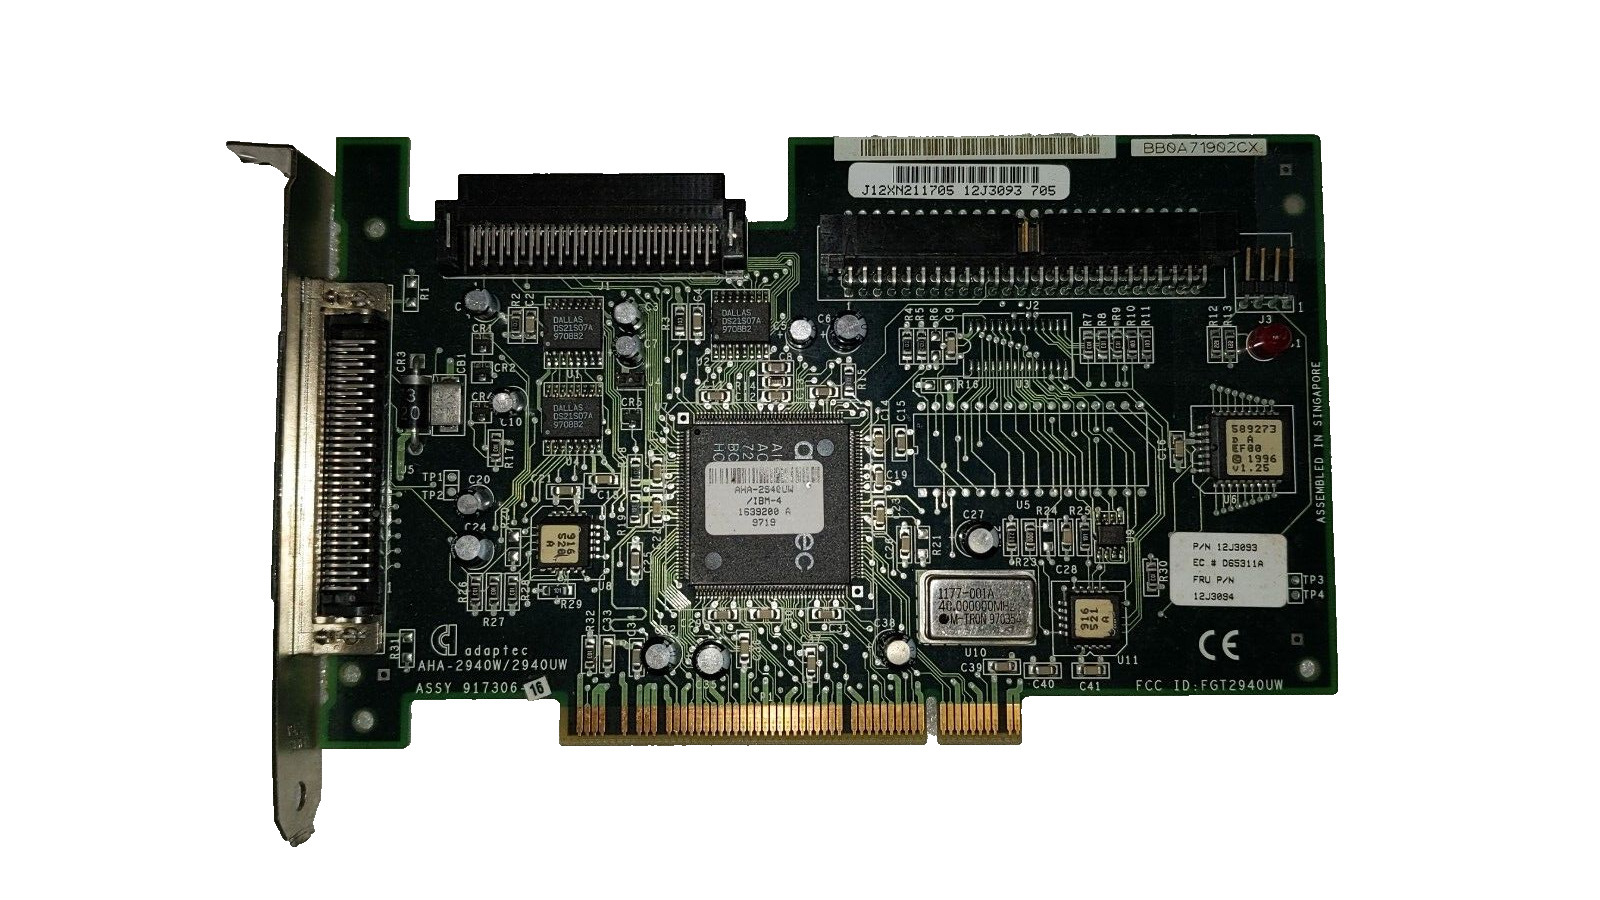 ADAPTEC AHA-2940UW ULTRA WIDE SCSI CONTROLLER PCI ADAPTER CARD 68 & 50 PIN 2940W